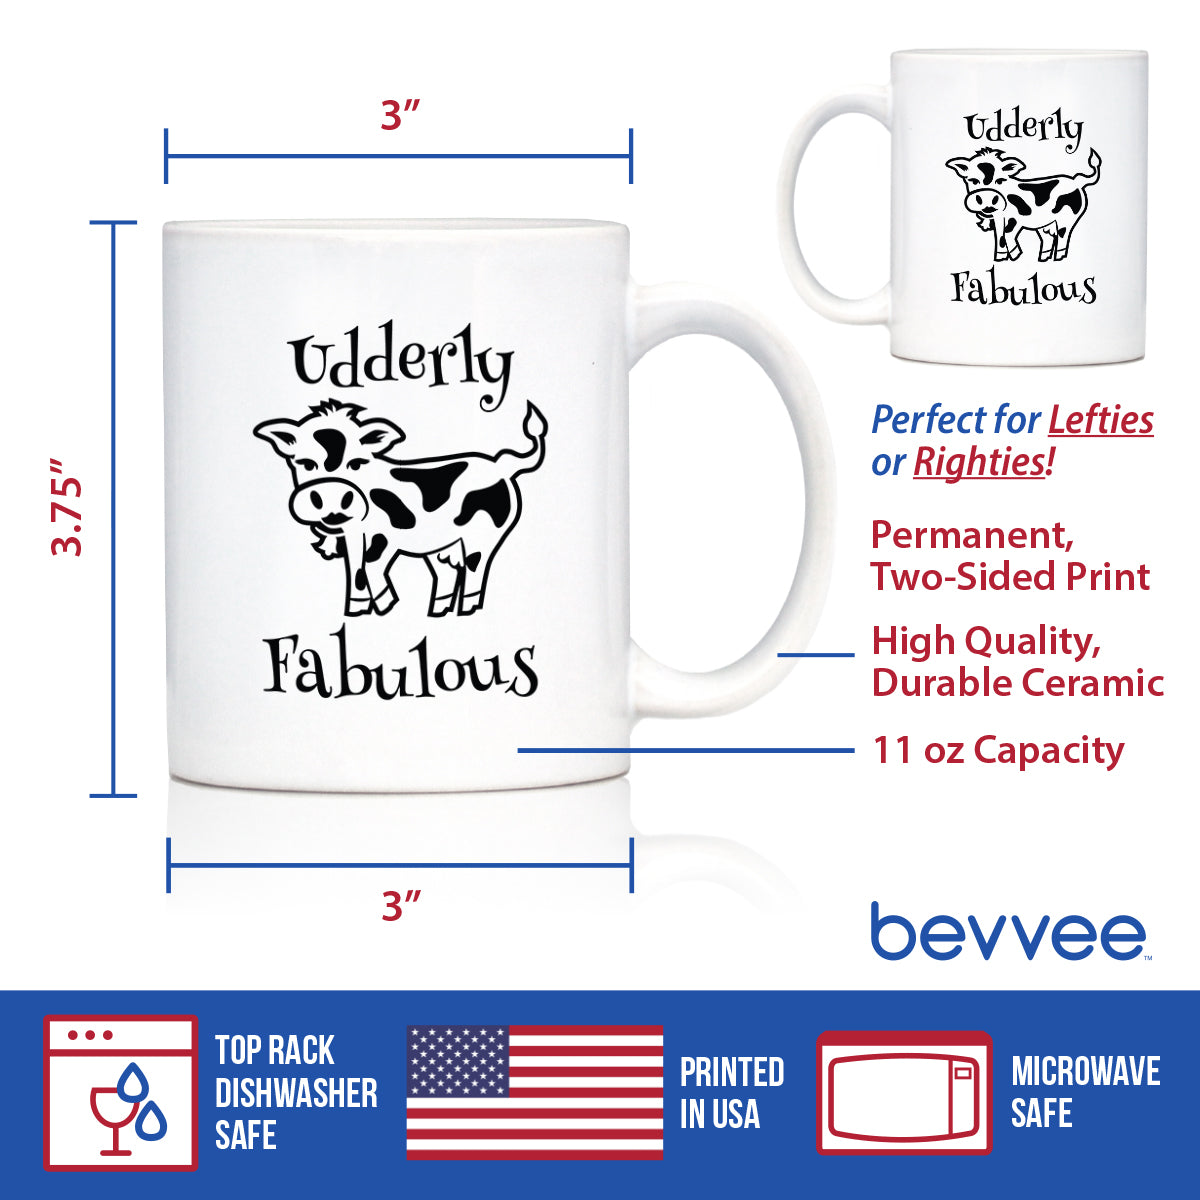 Udderly Fabulous - Cow Coffee Mug - Funny Cow Gifts &amp; Decor